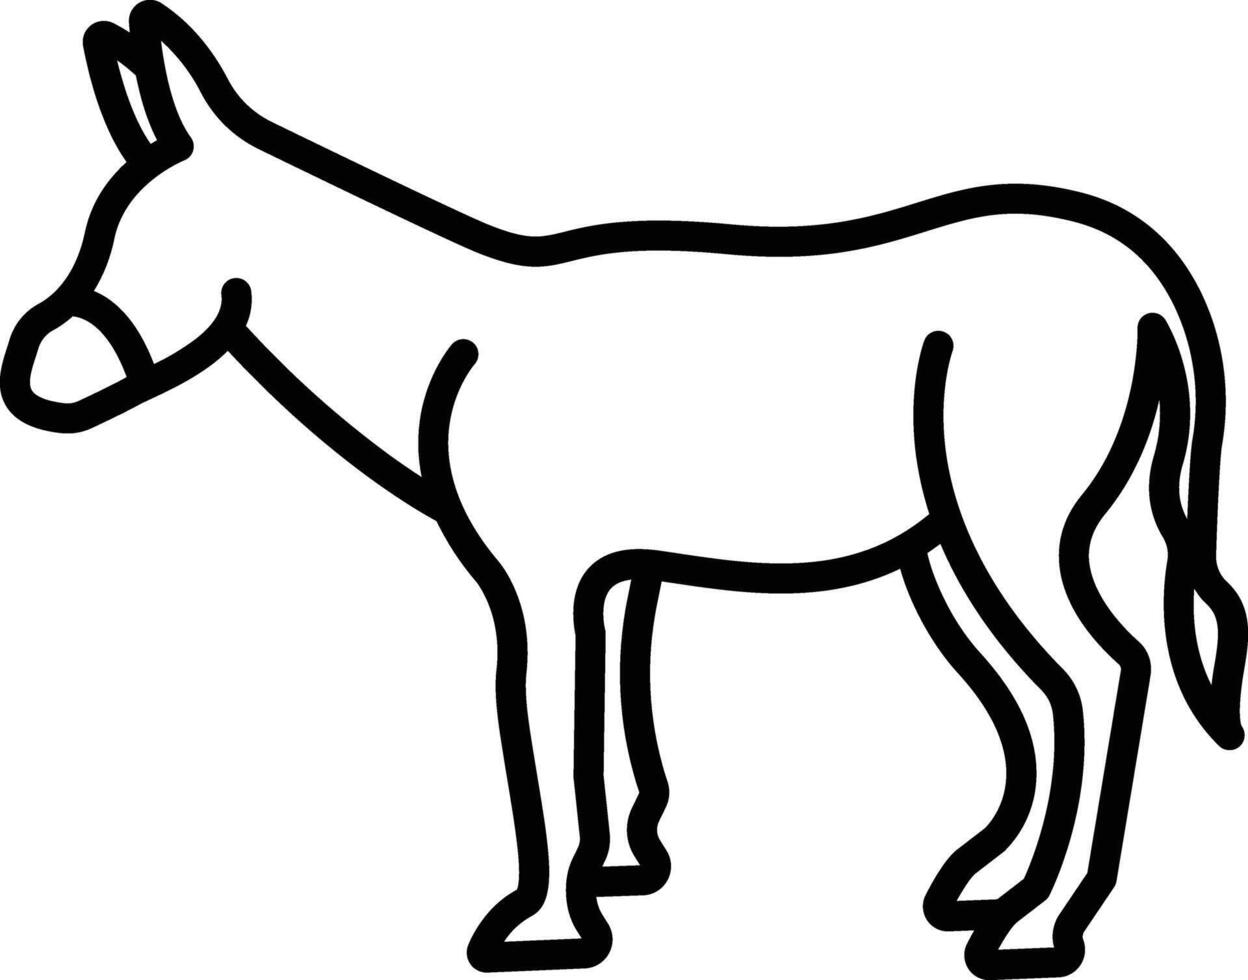 Donkey face outline vector illustration